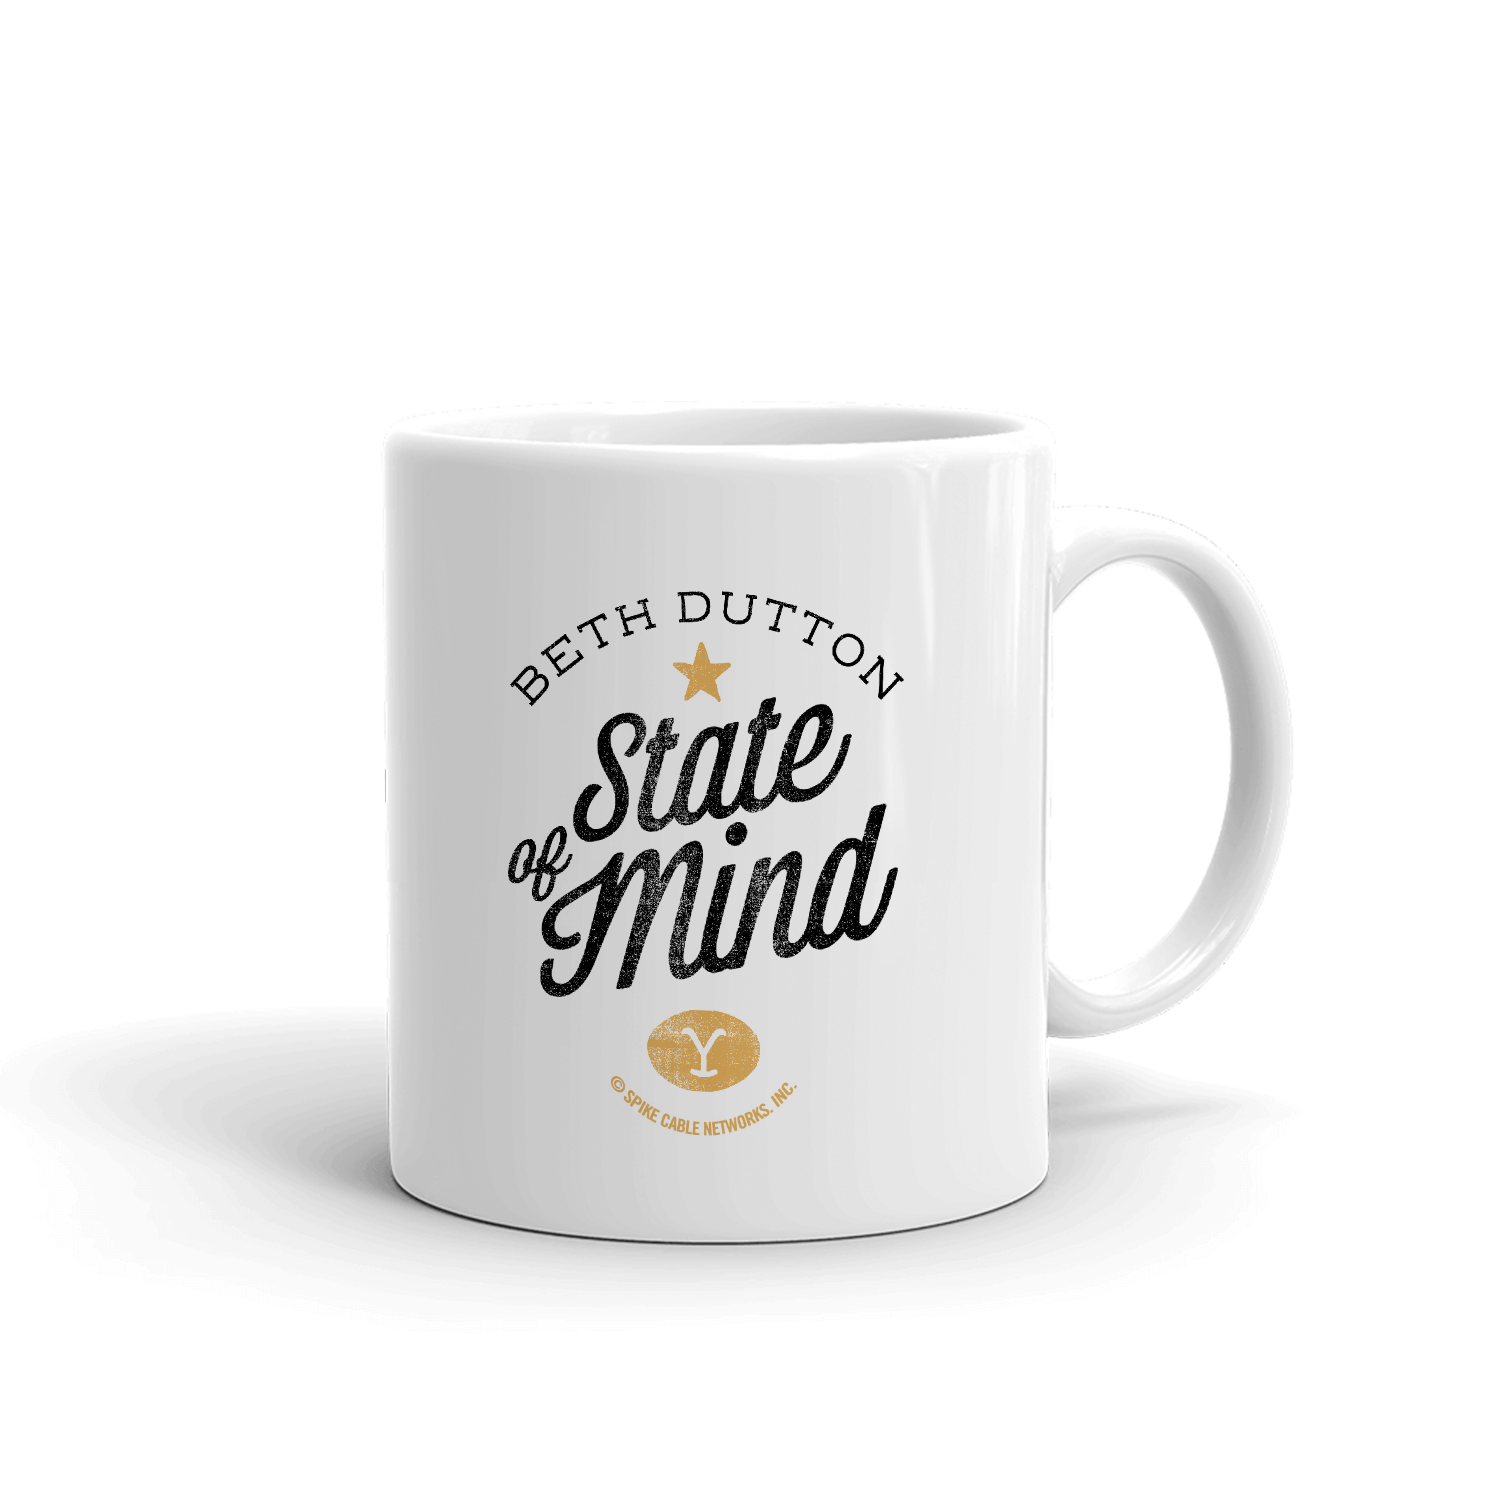 Yellowstone Beth Dutton State of Mind White Mug